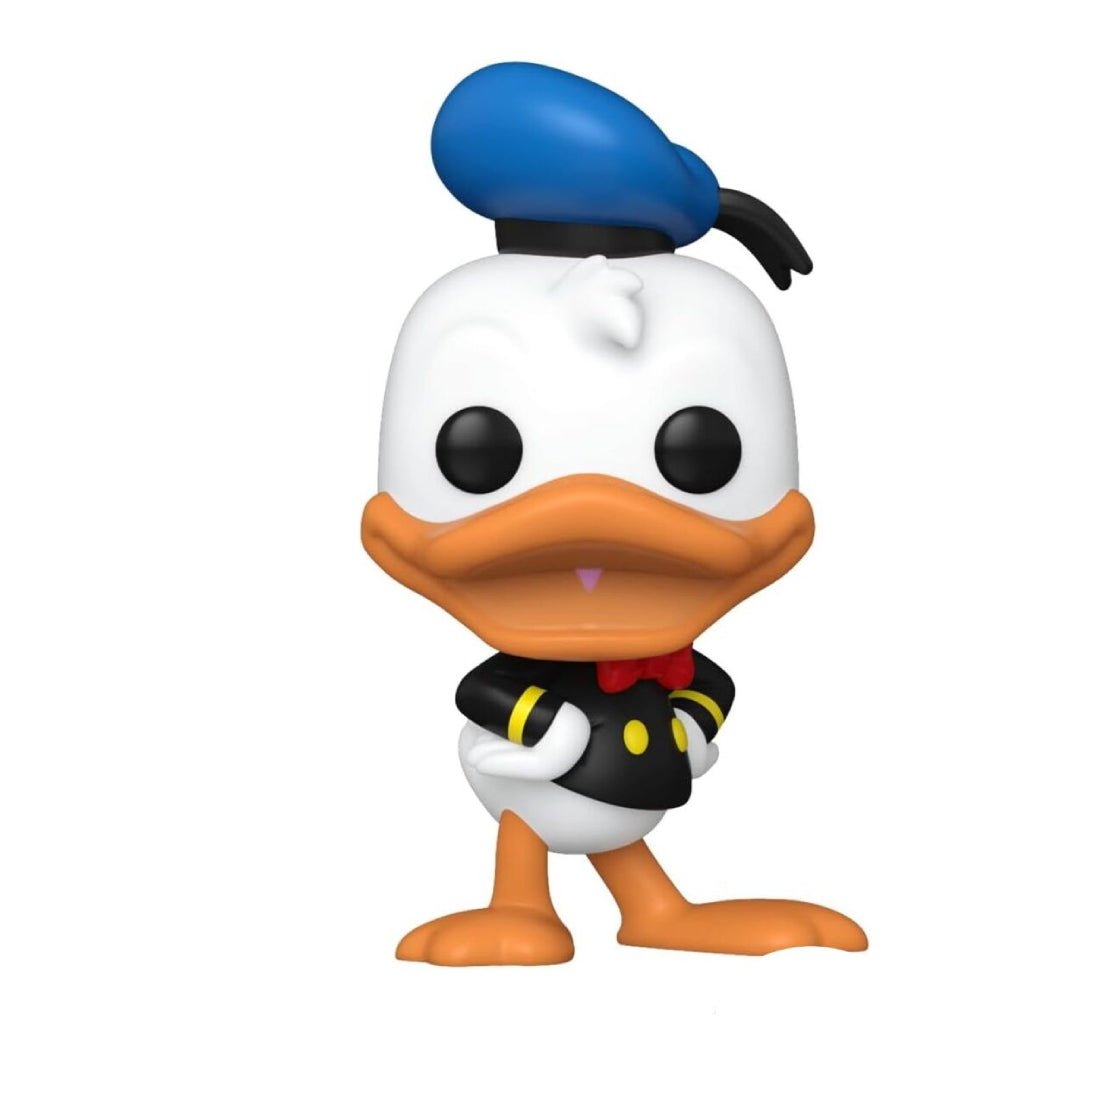 Funko Pop! Disney: Donald Duck 90th - Donald Duck (1938) #1442 - دمية - Store 974 | ستور ٩٧٤